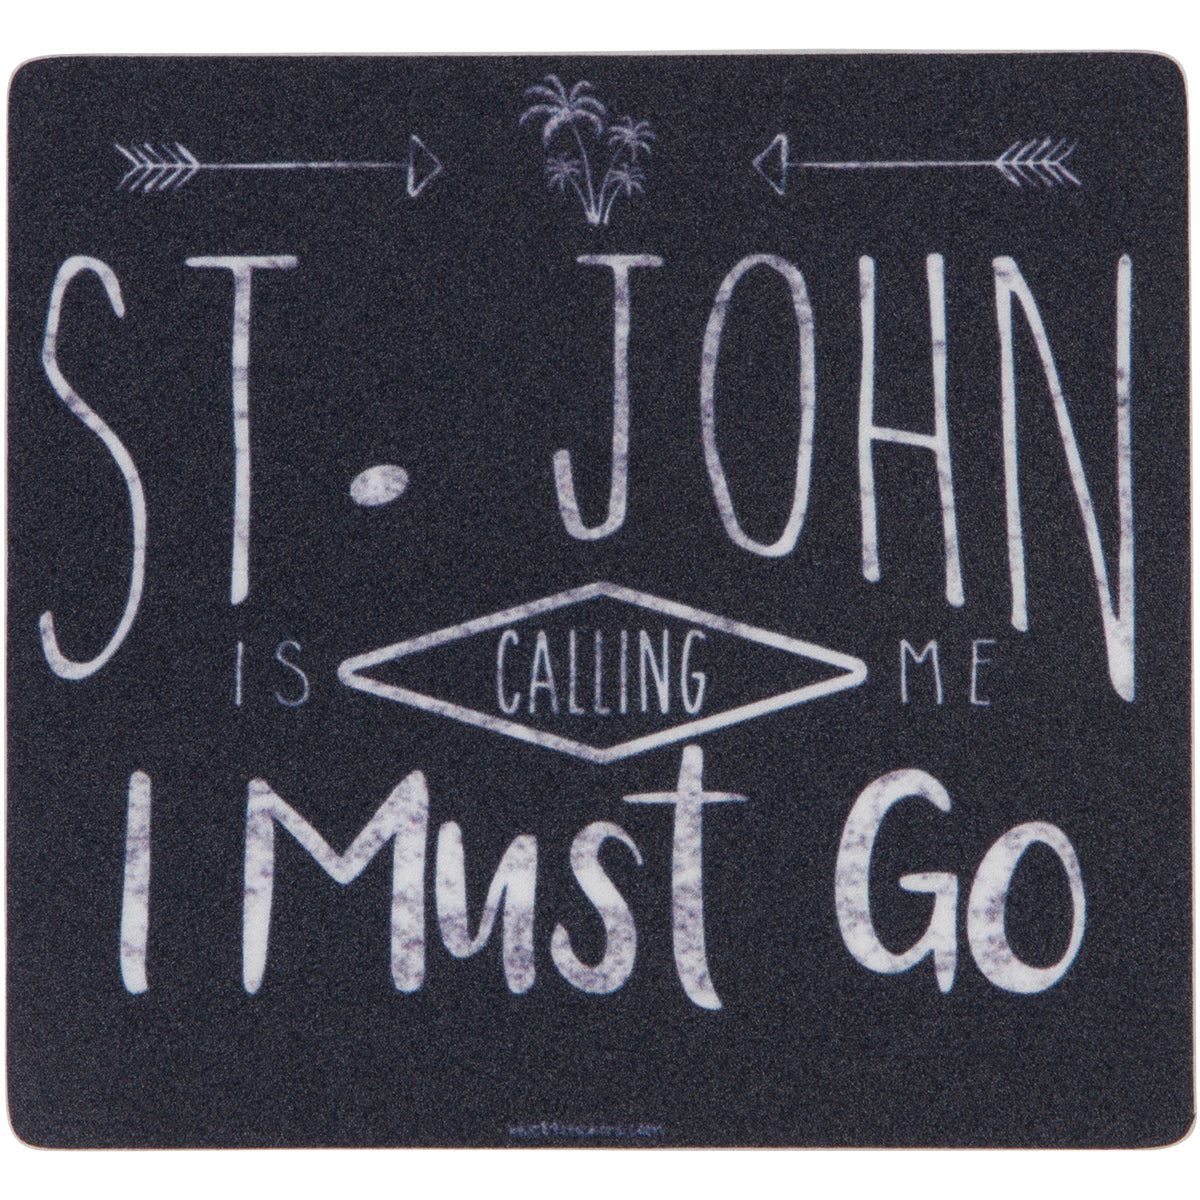 ST. JOHN IS CALLING STICKER